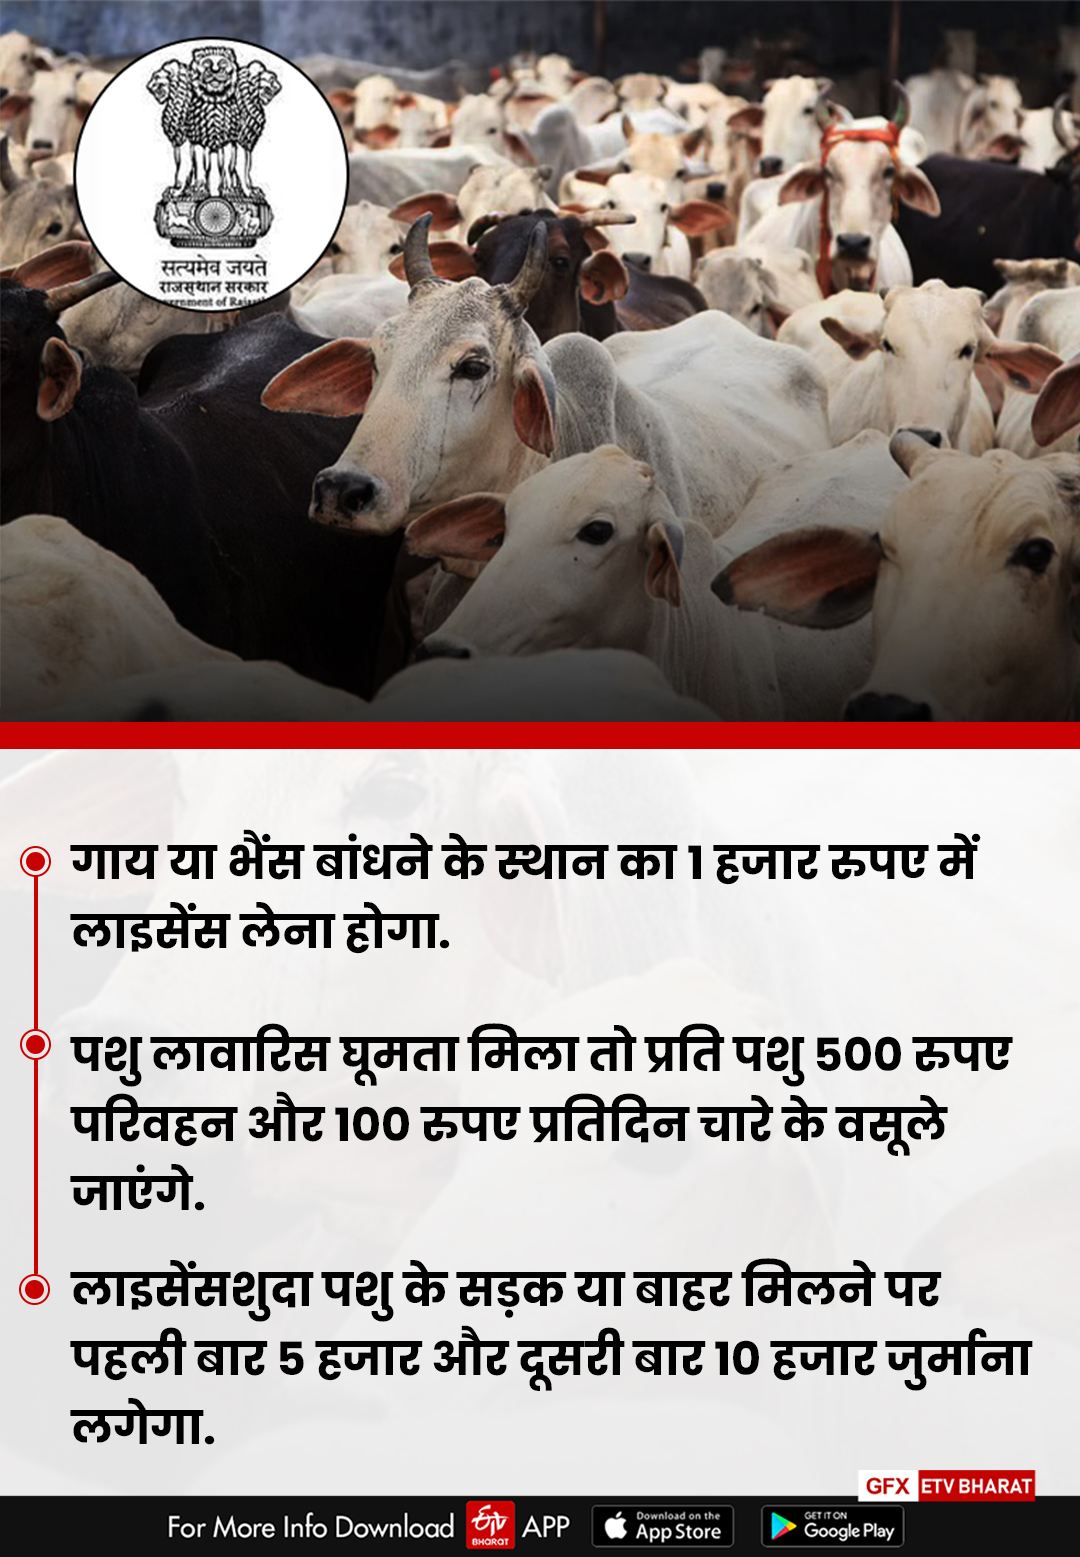 Rajasthan cow laws